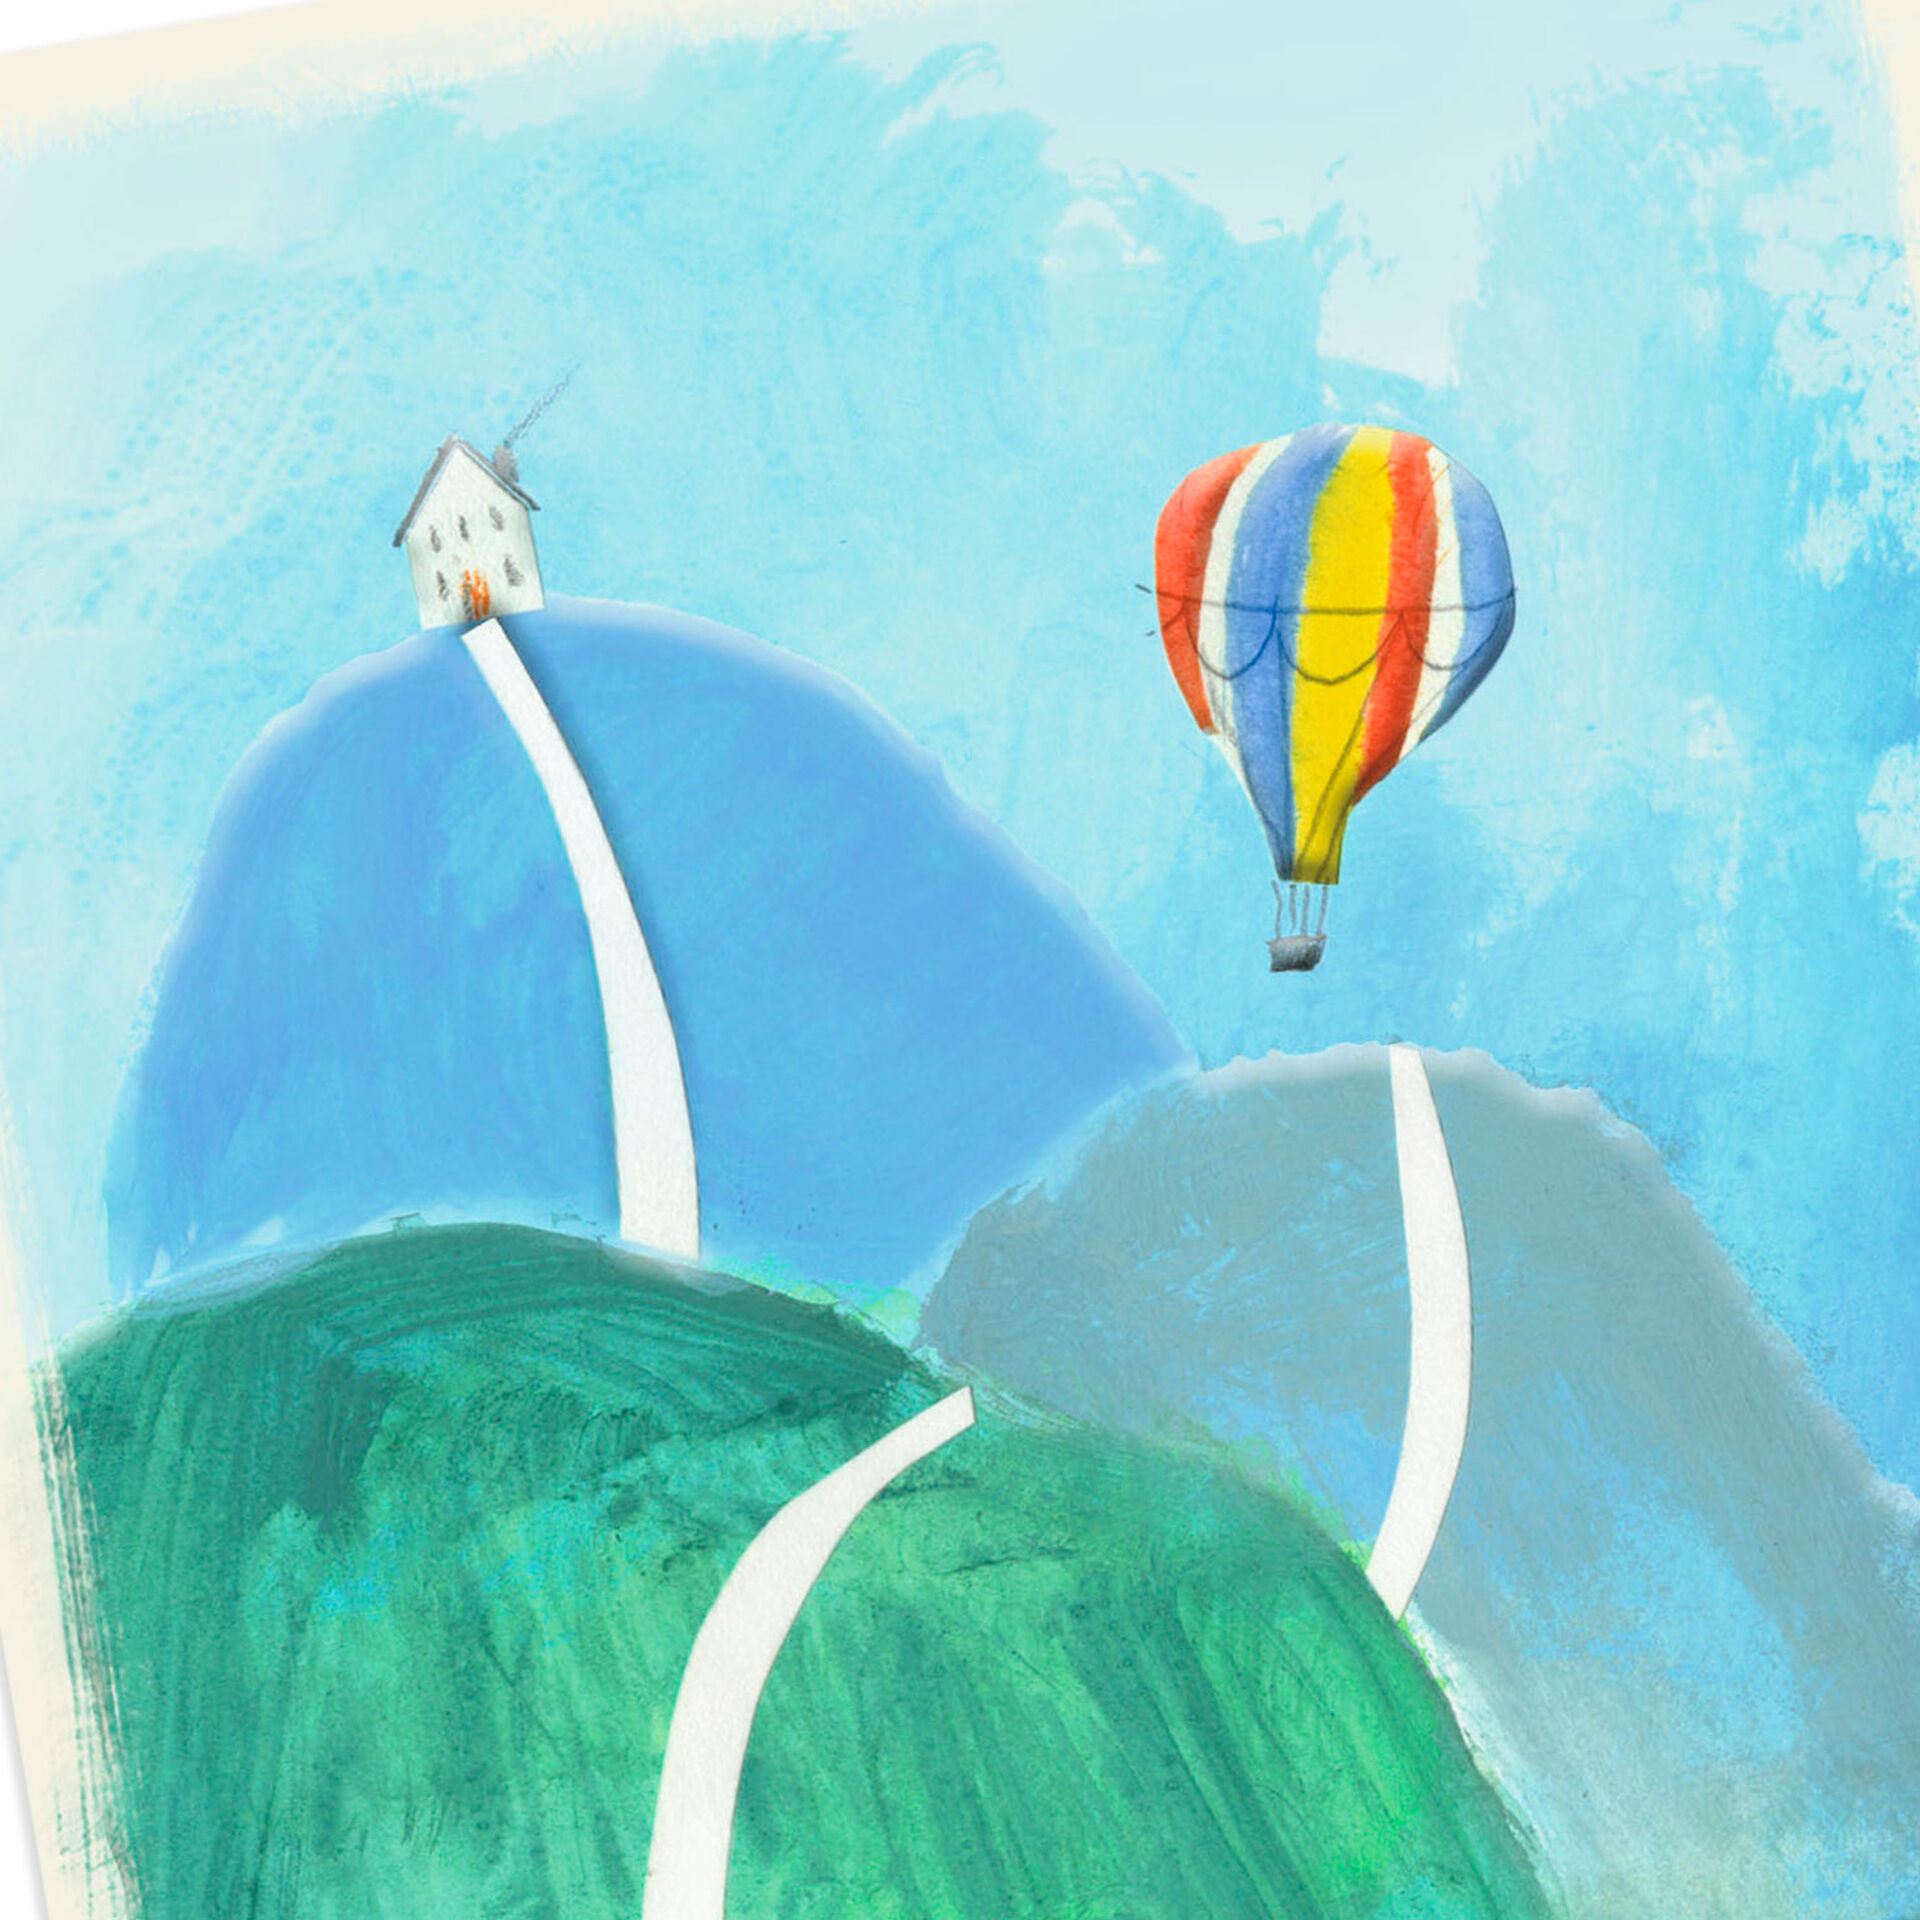 Hot-Air-Balloon-and-Mountains-Blank-Card_299RJB1111_03